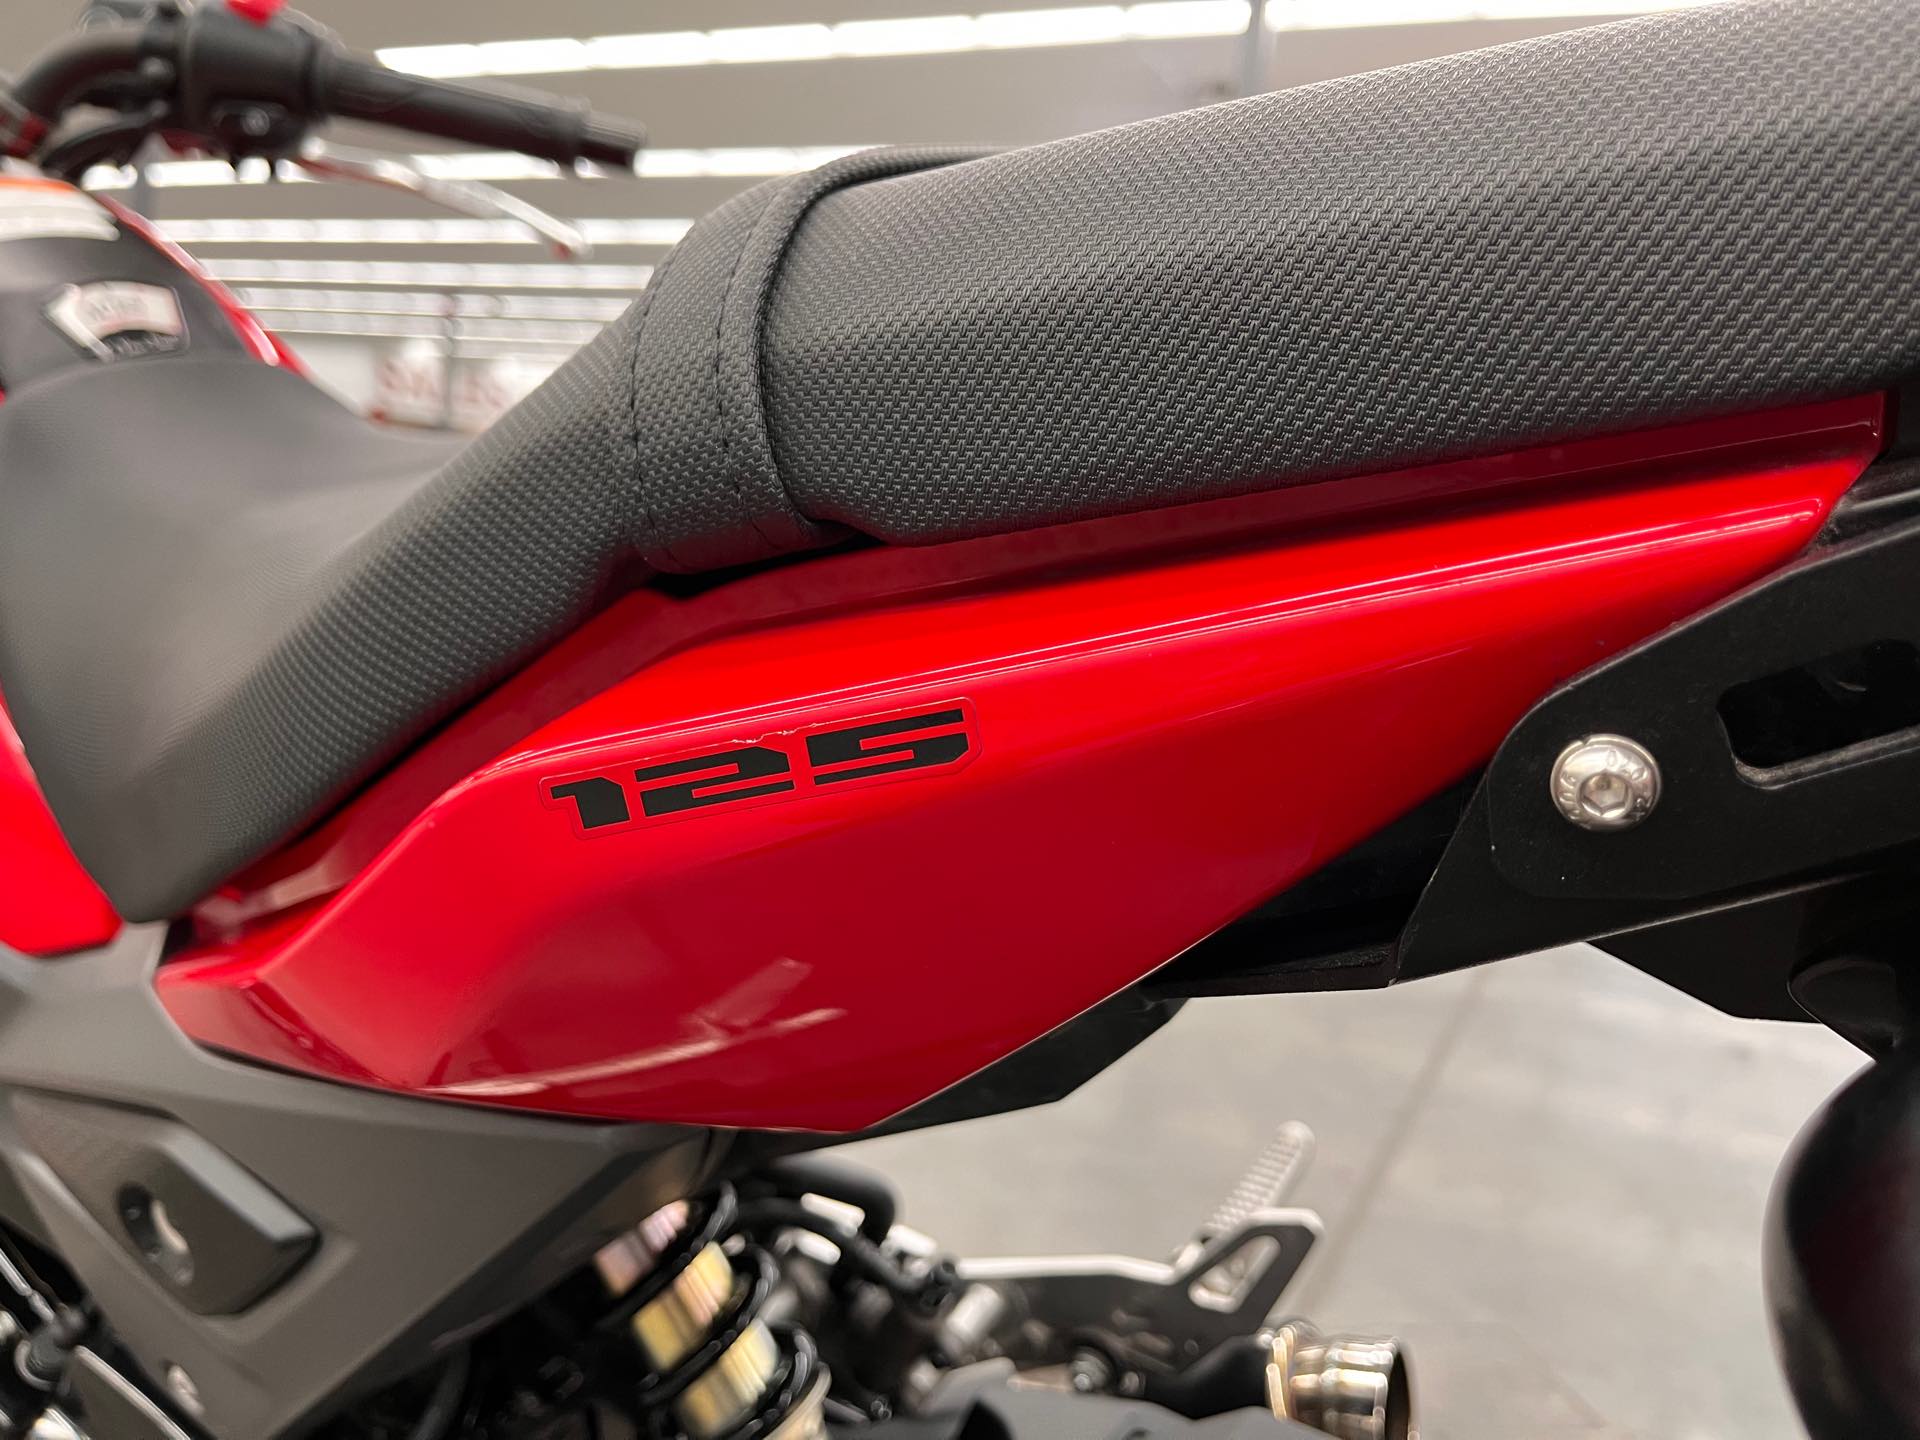 2018 Honda Grom Base at Aces Motorcycles - Denver